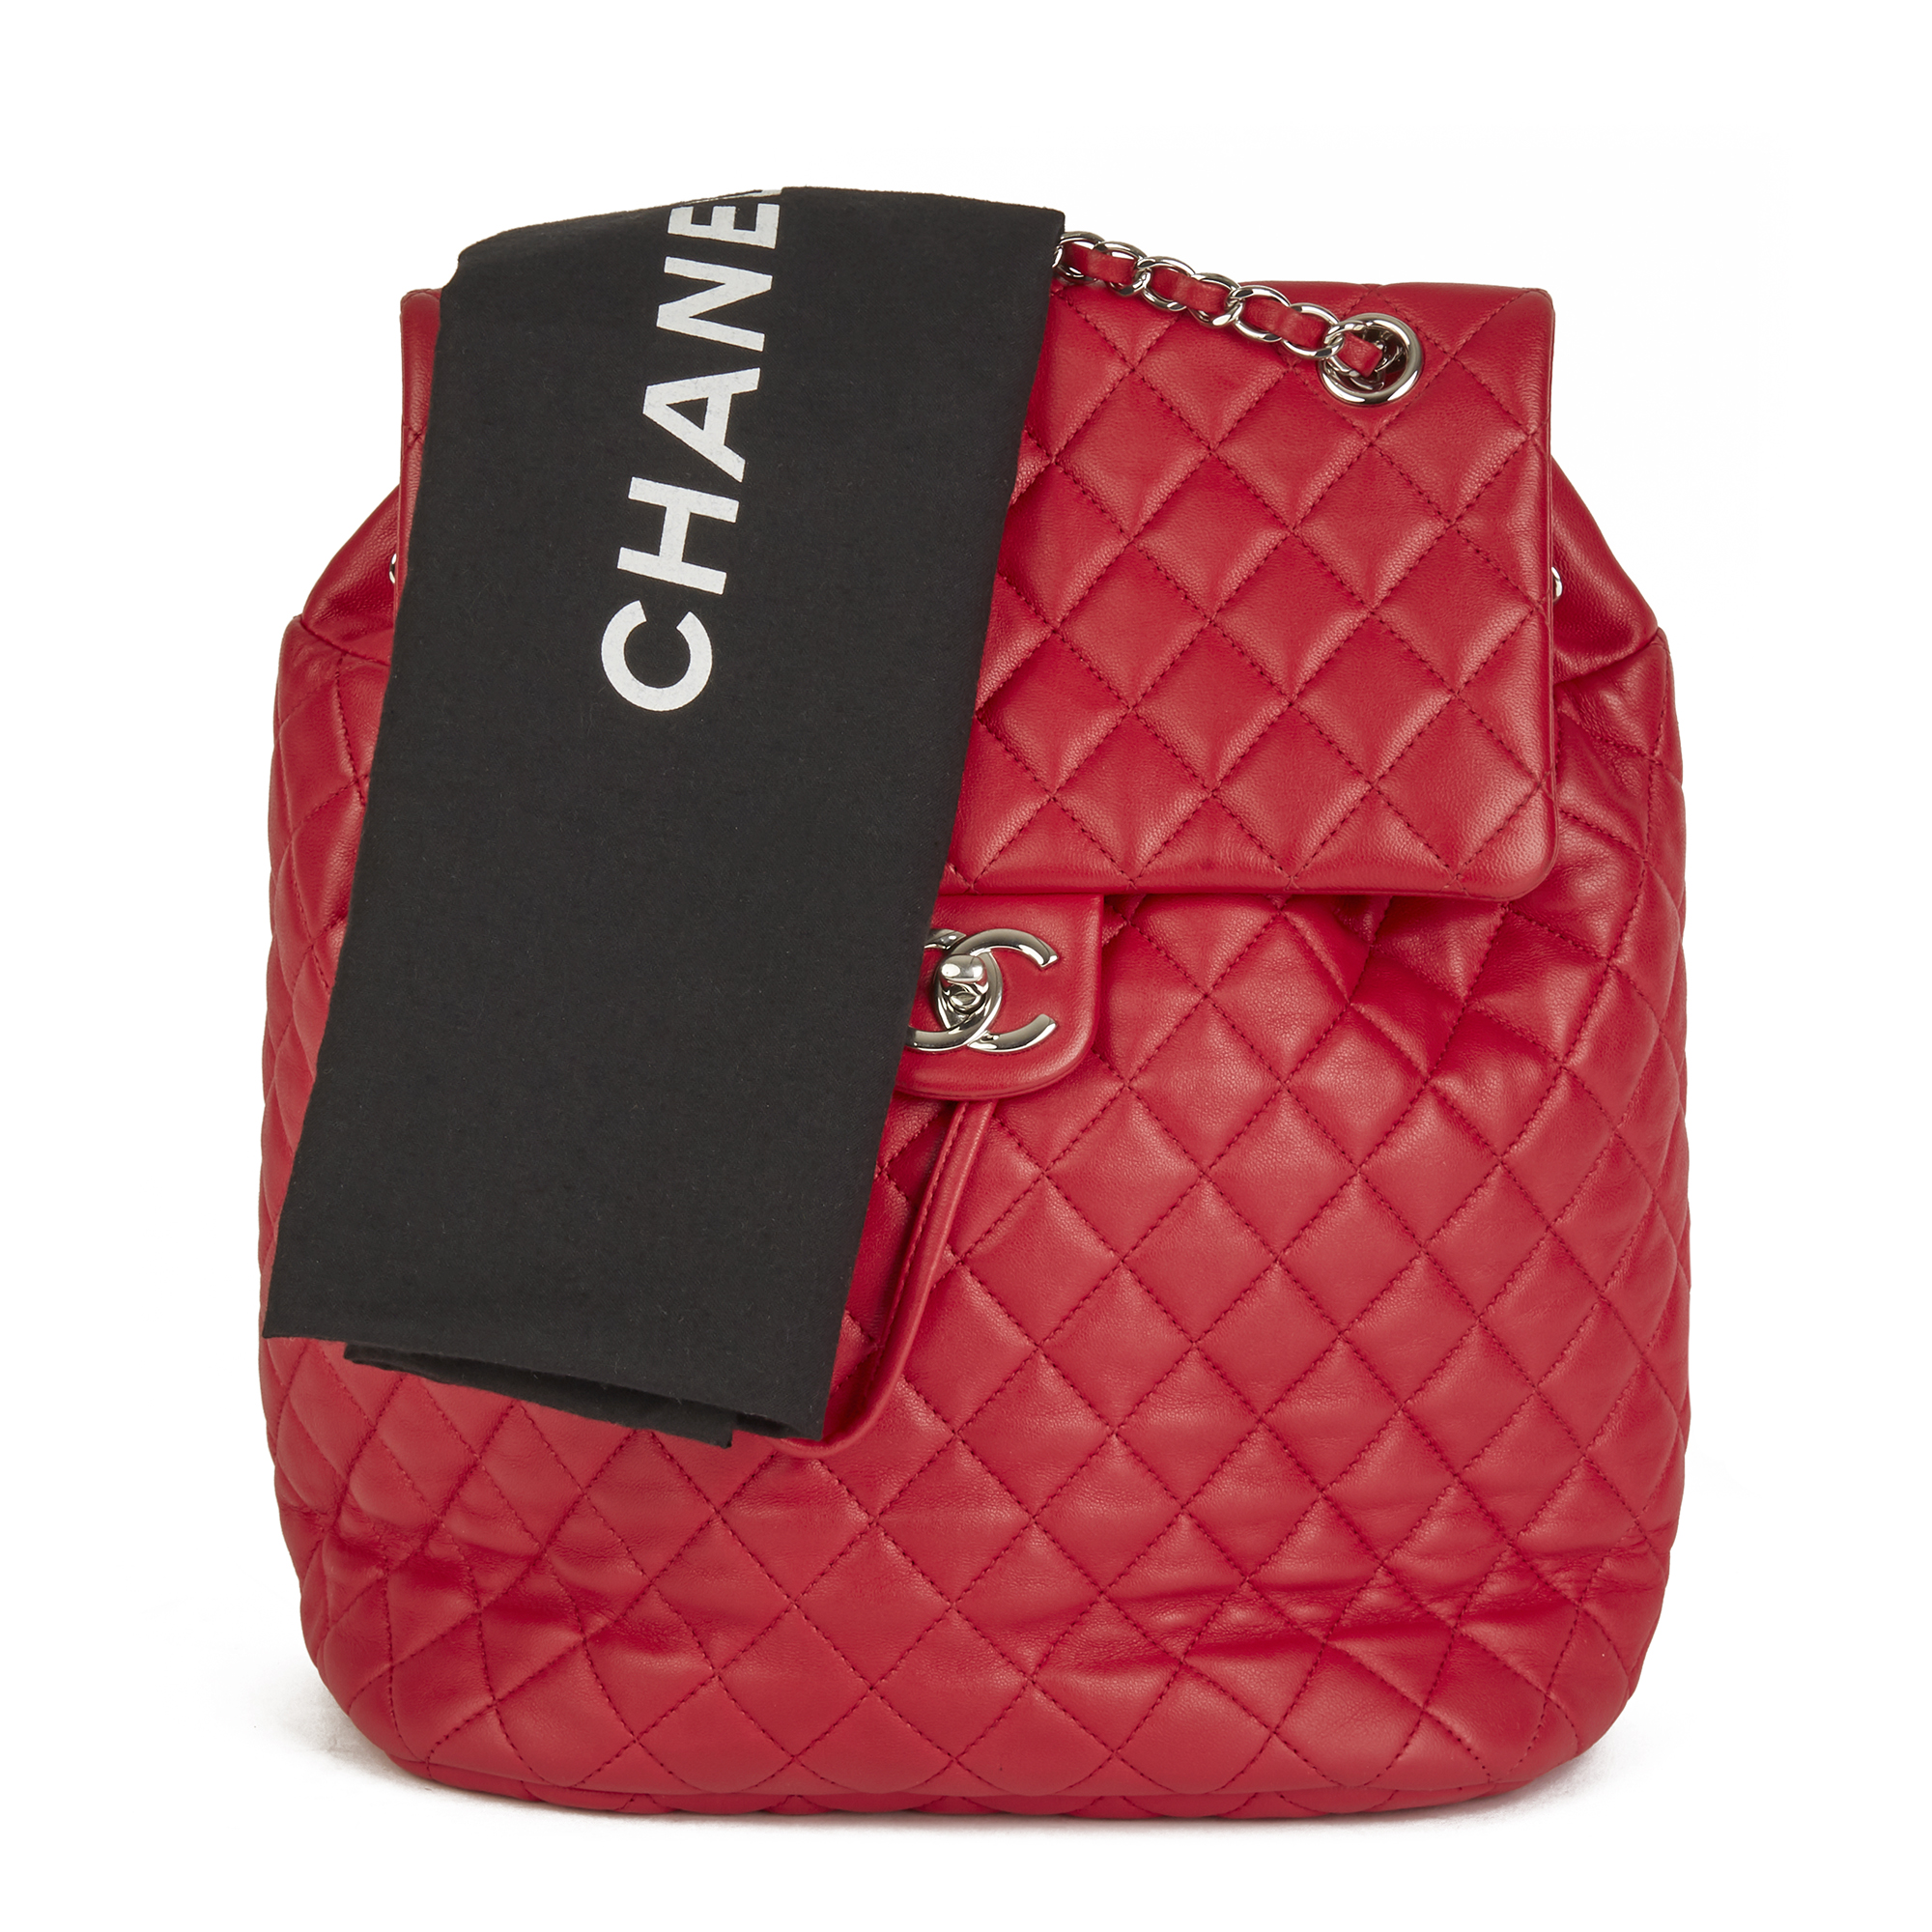 Chanel Large Urban Spirit Backpack - Image 3 of 12